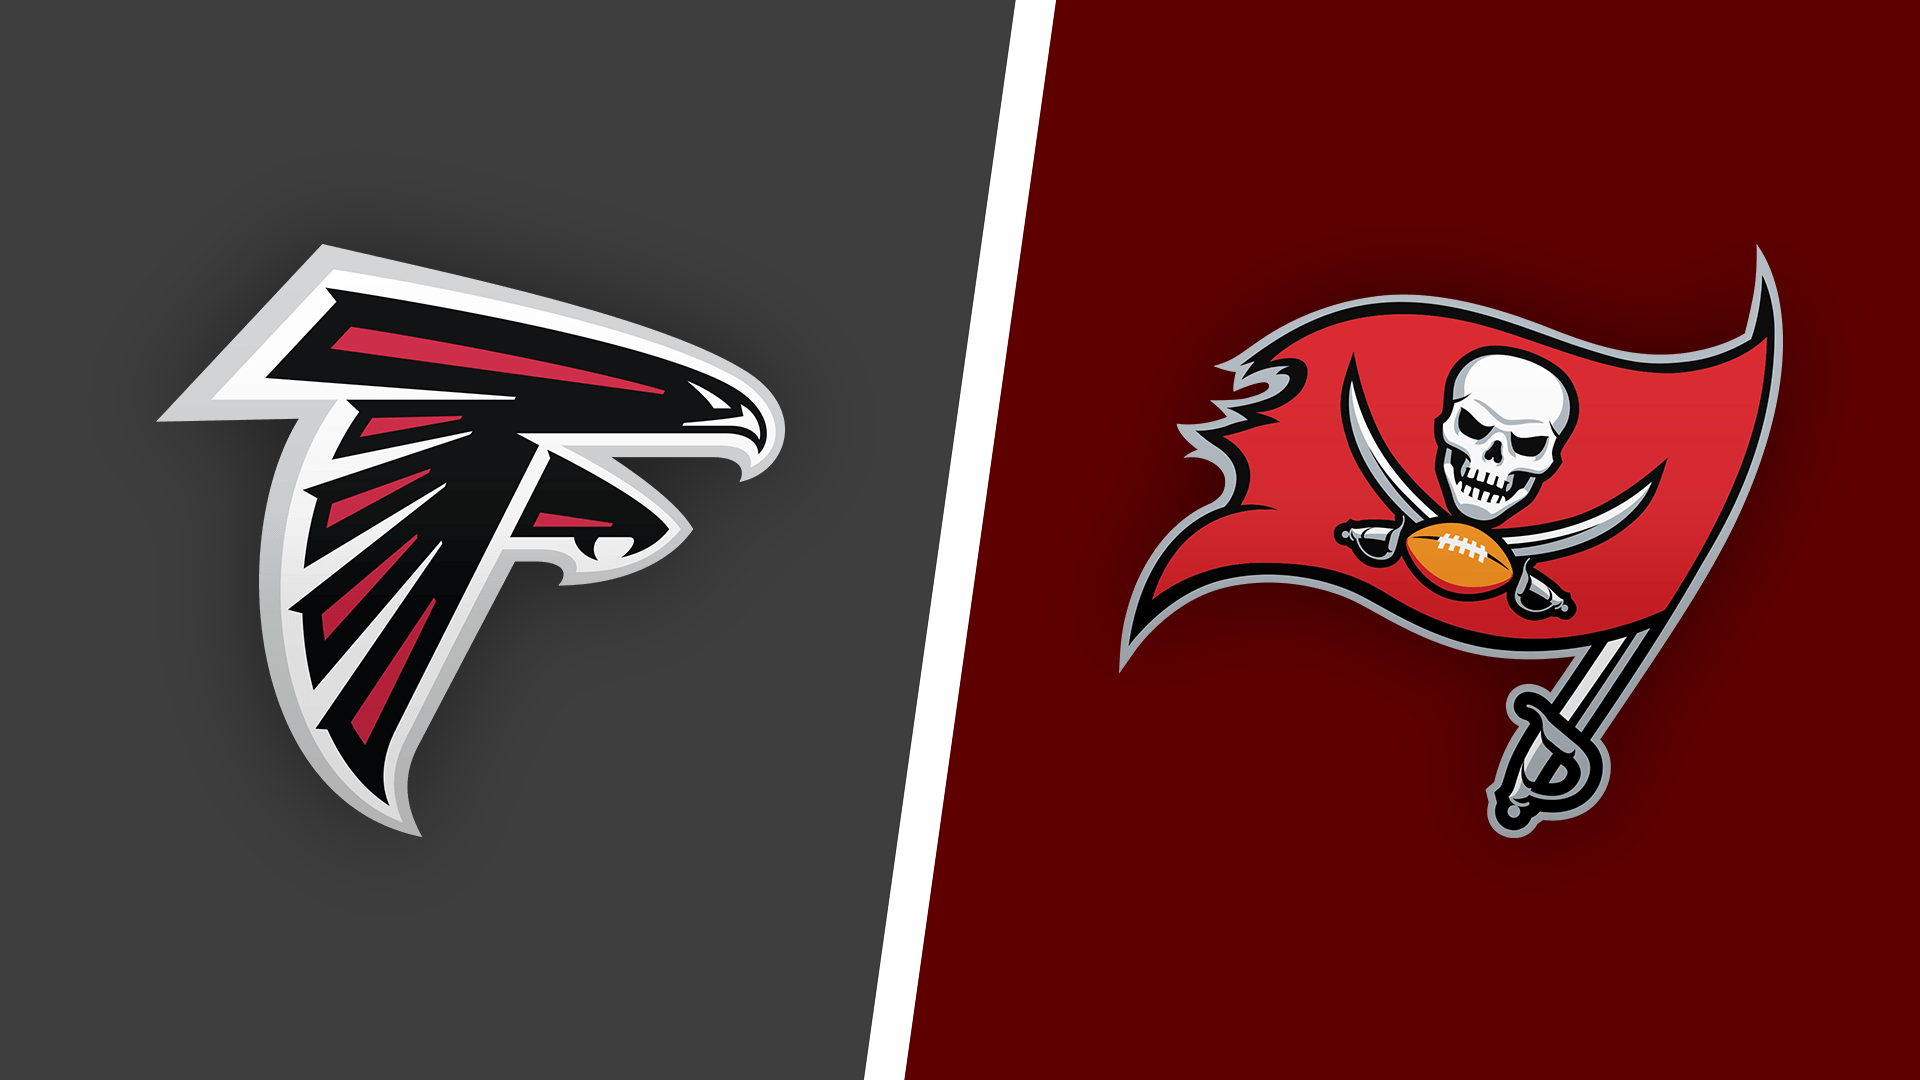 Tampa Bay Buccaneers at Atlanta Falcons – Preview, Tips and Odds